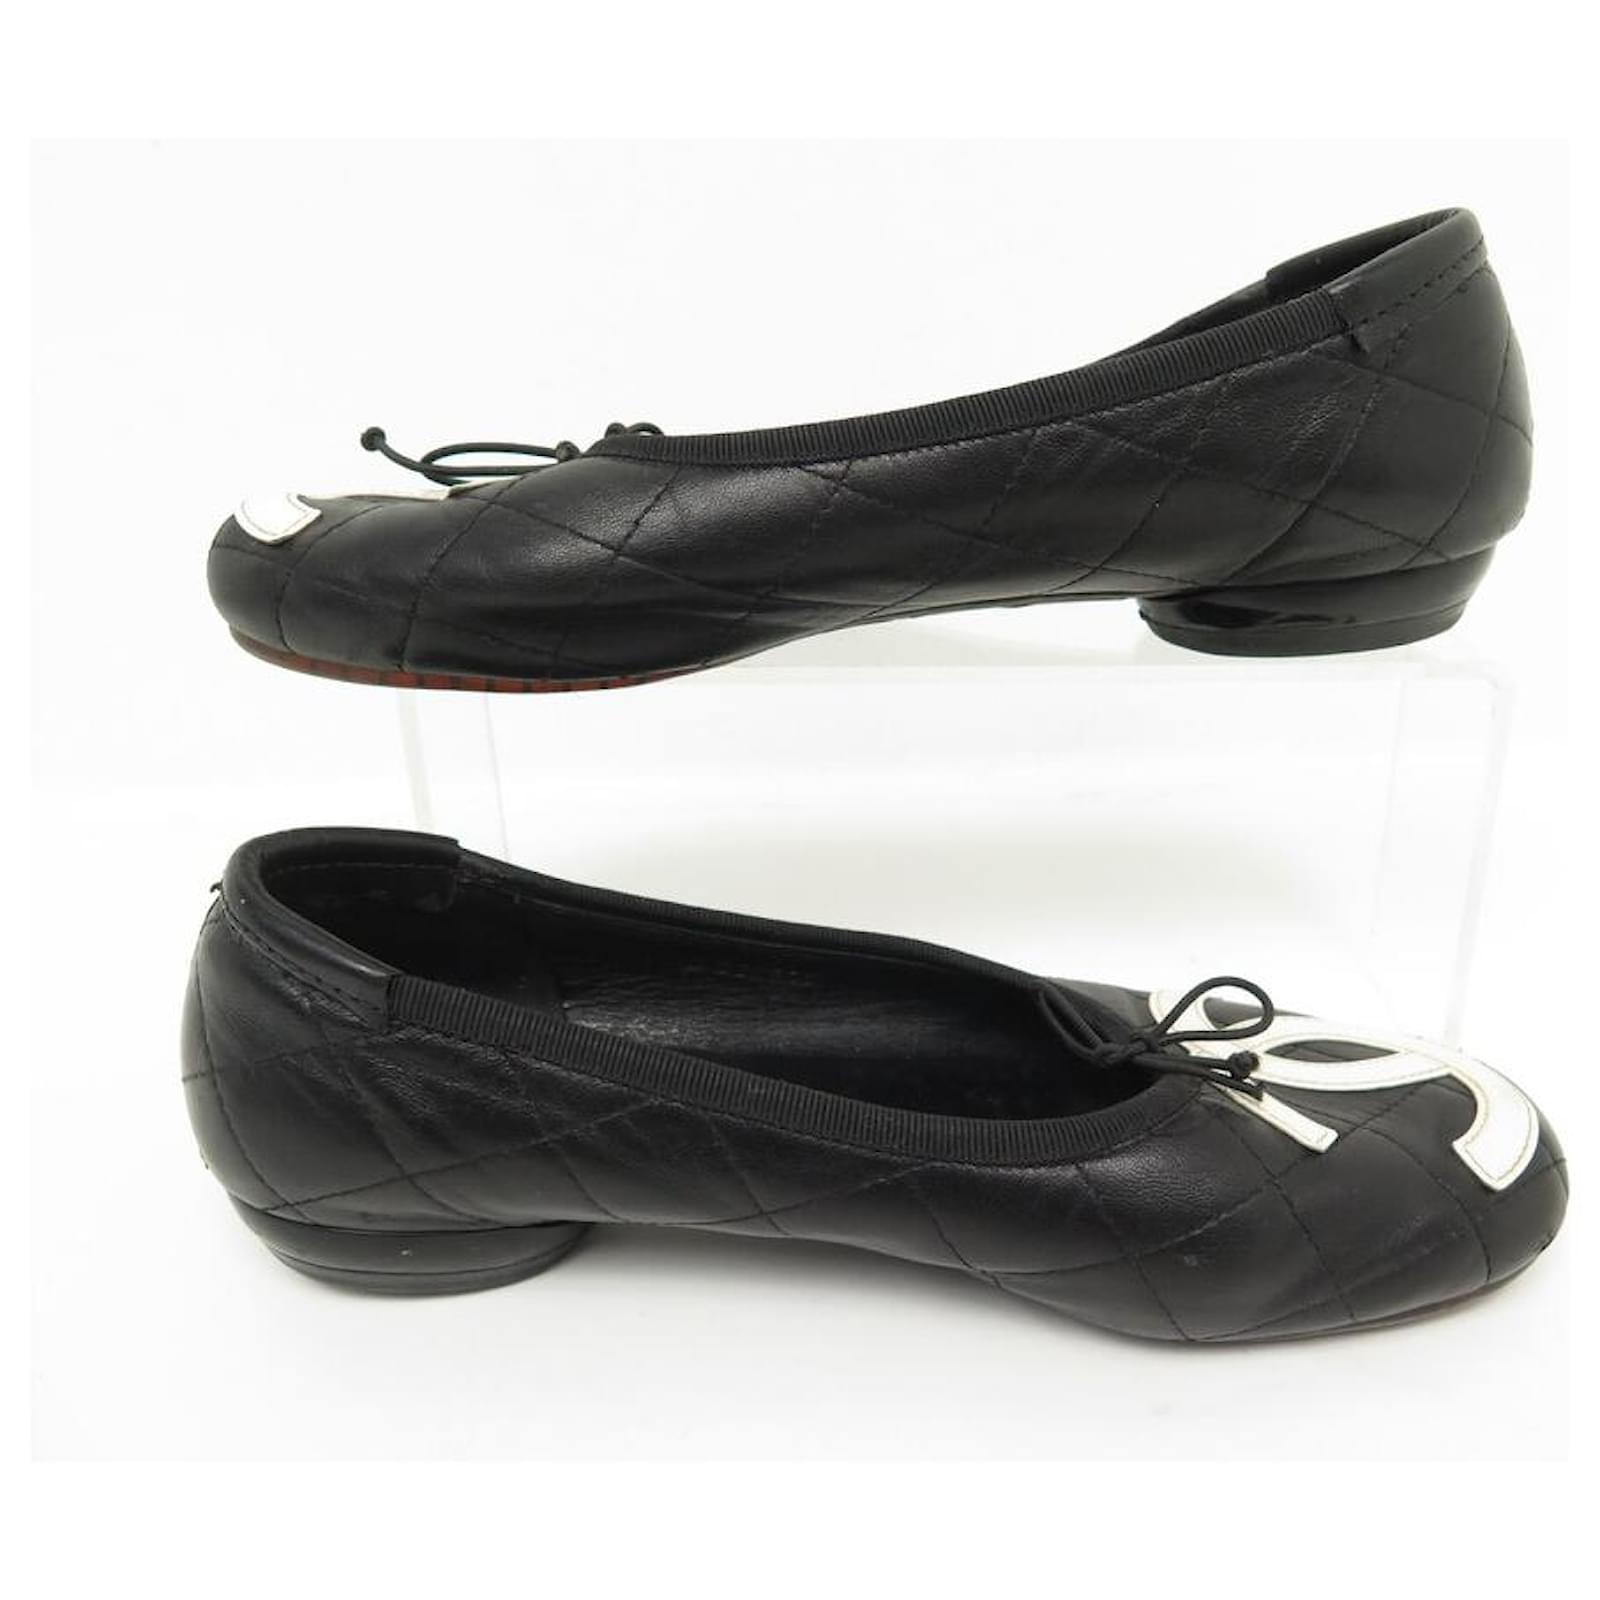 CHANEL G24712 Cambon Line CC Ribbon Flat shoes Shoes Leather shoes Black